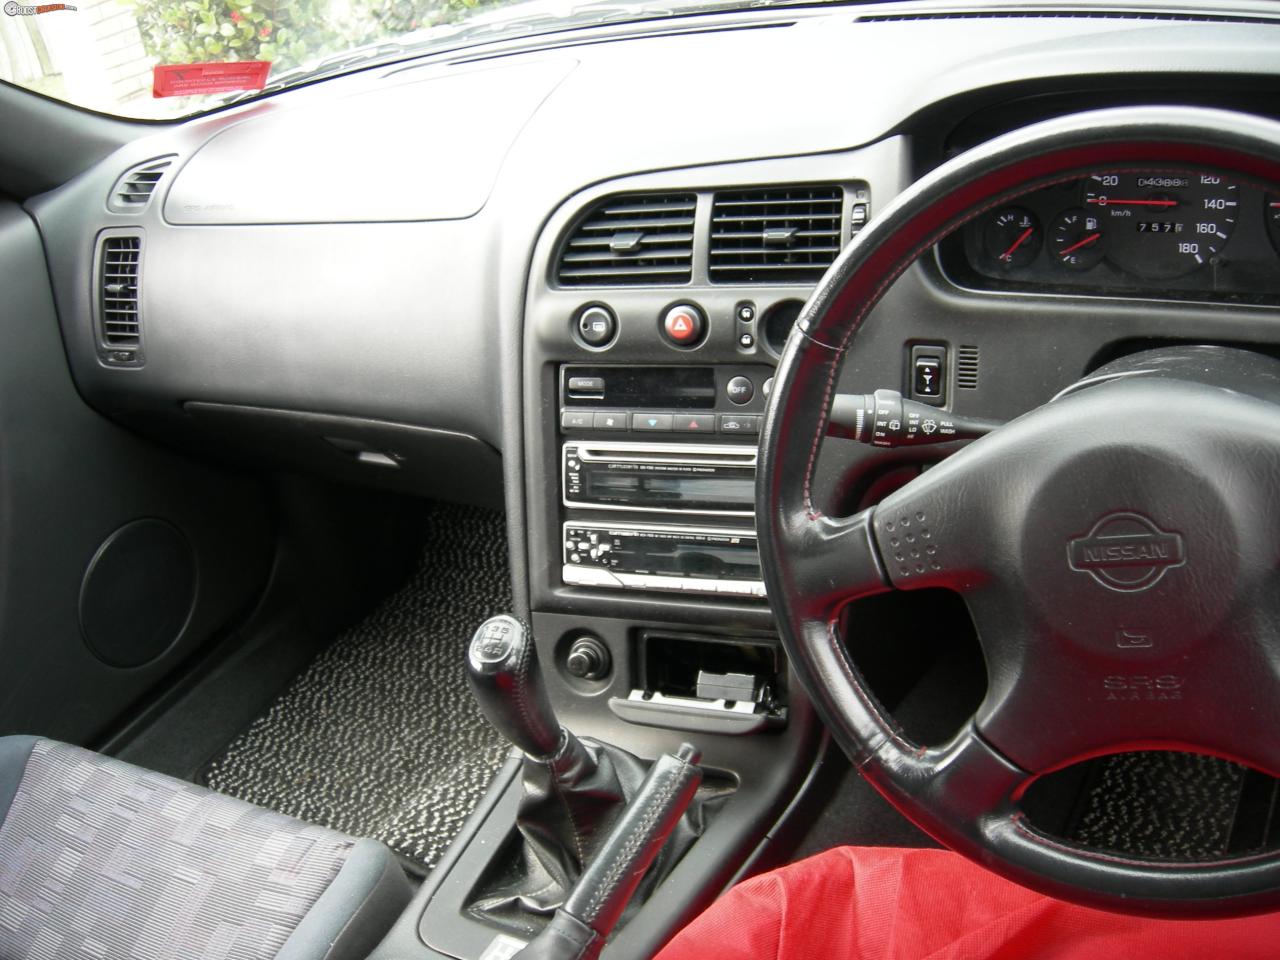 1997 Nissan Skyline R33